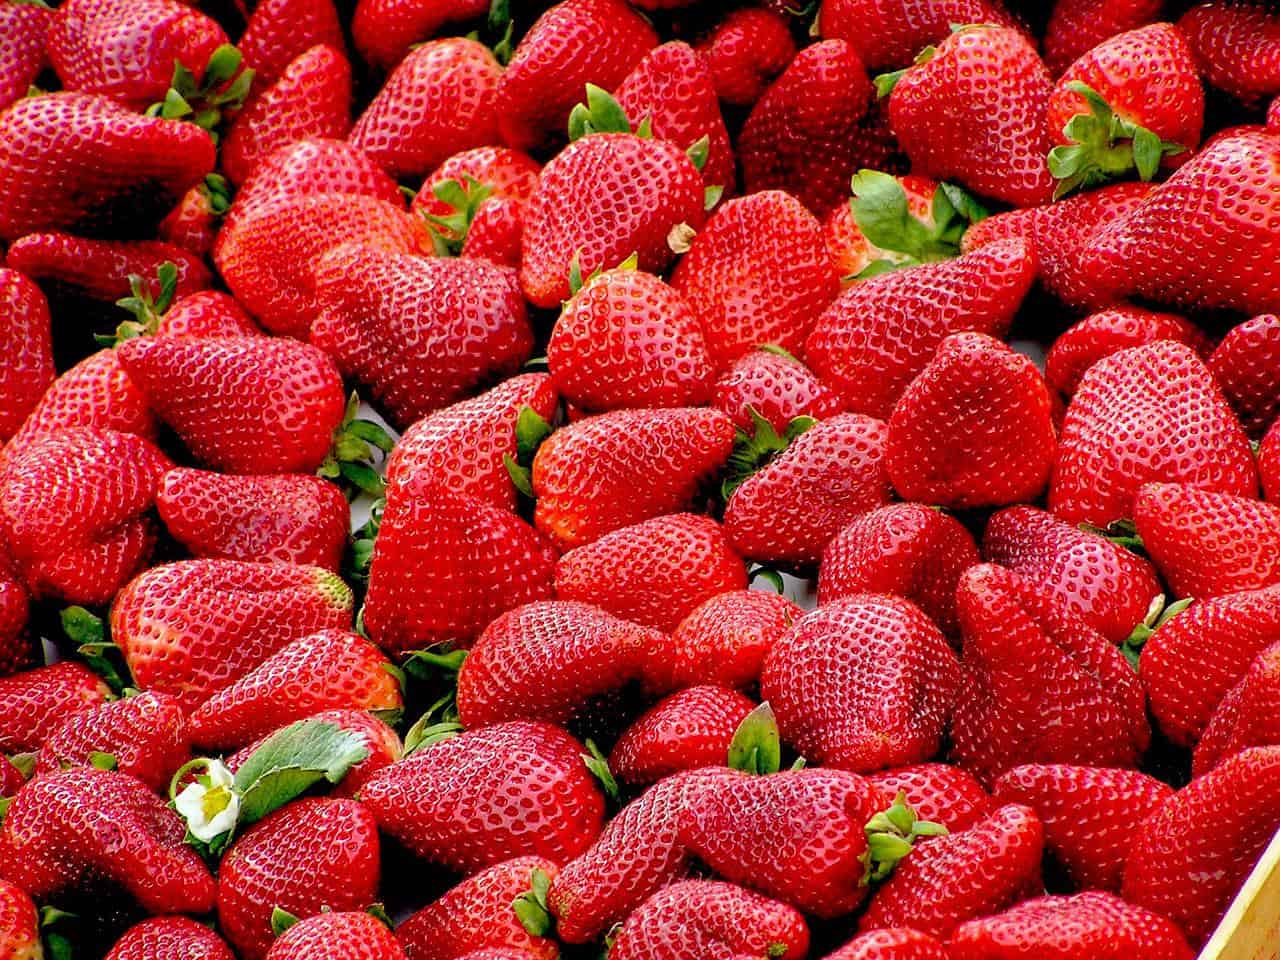 https://www.floridadaily.com/wp-content/uploads/2022/05/strawberries.jpeg